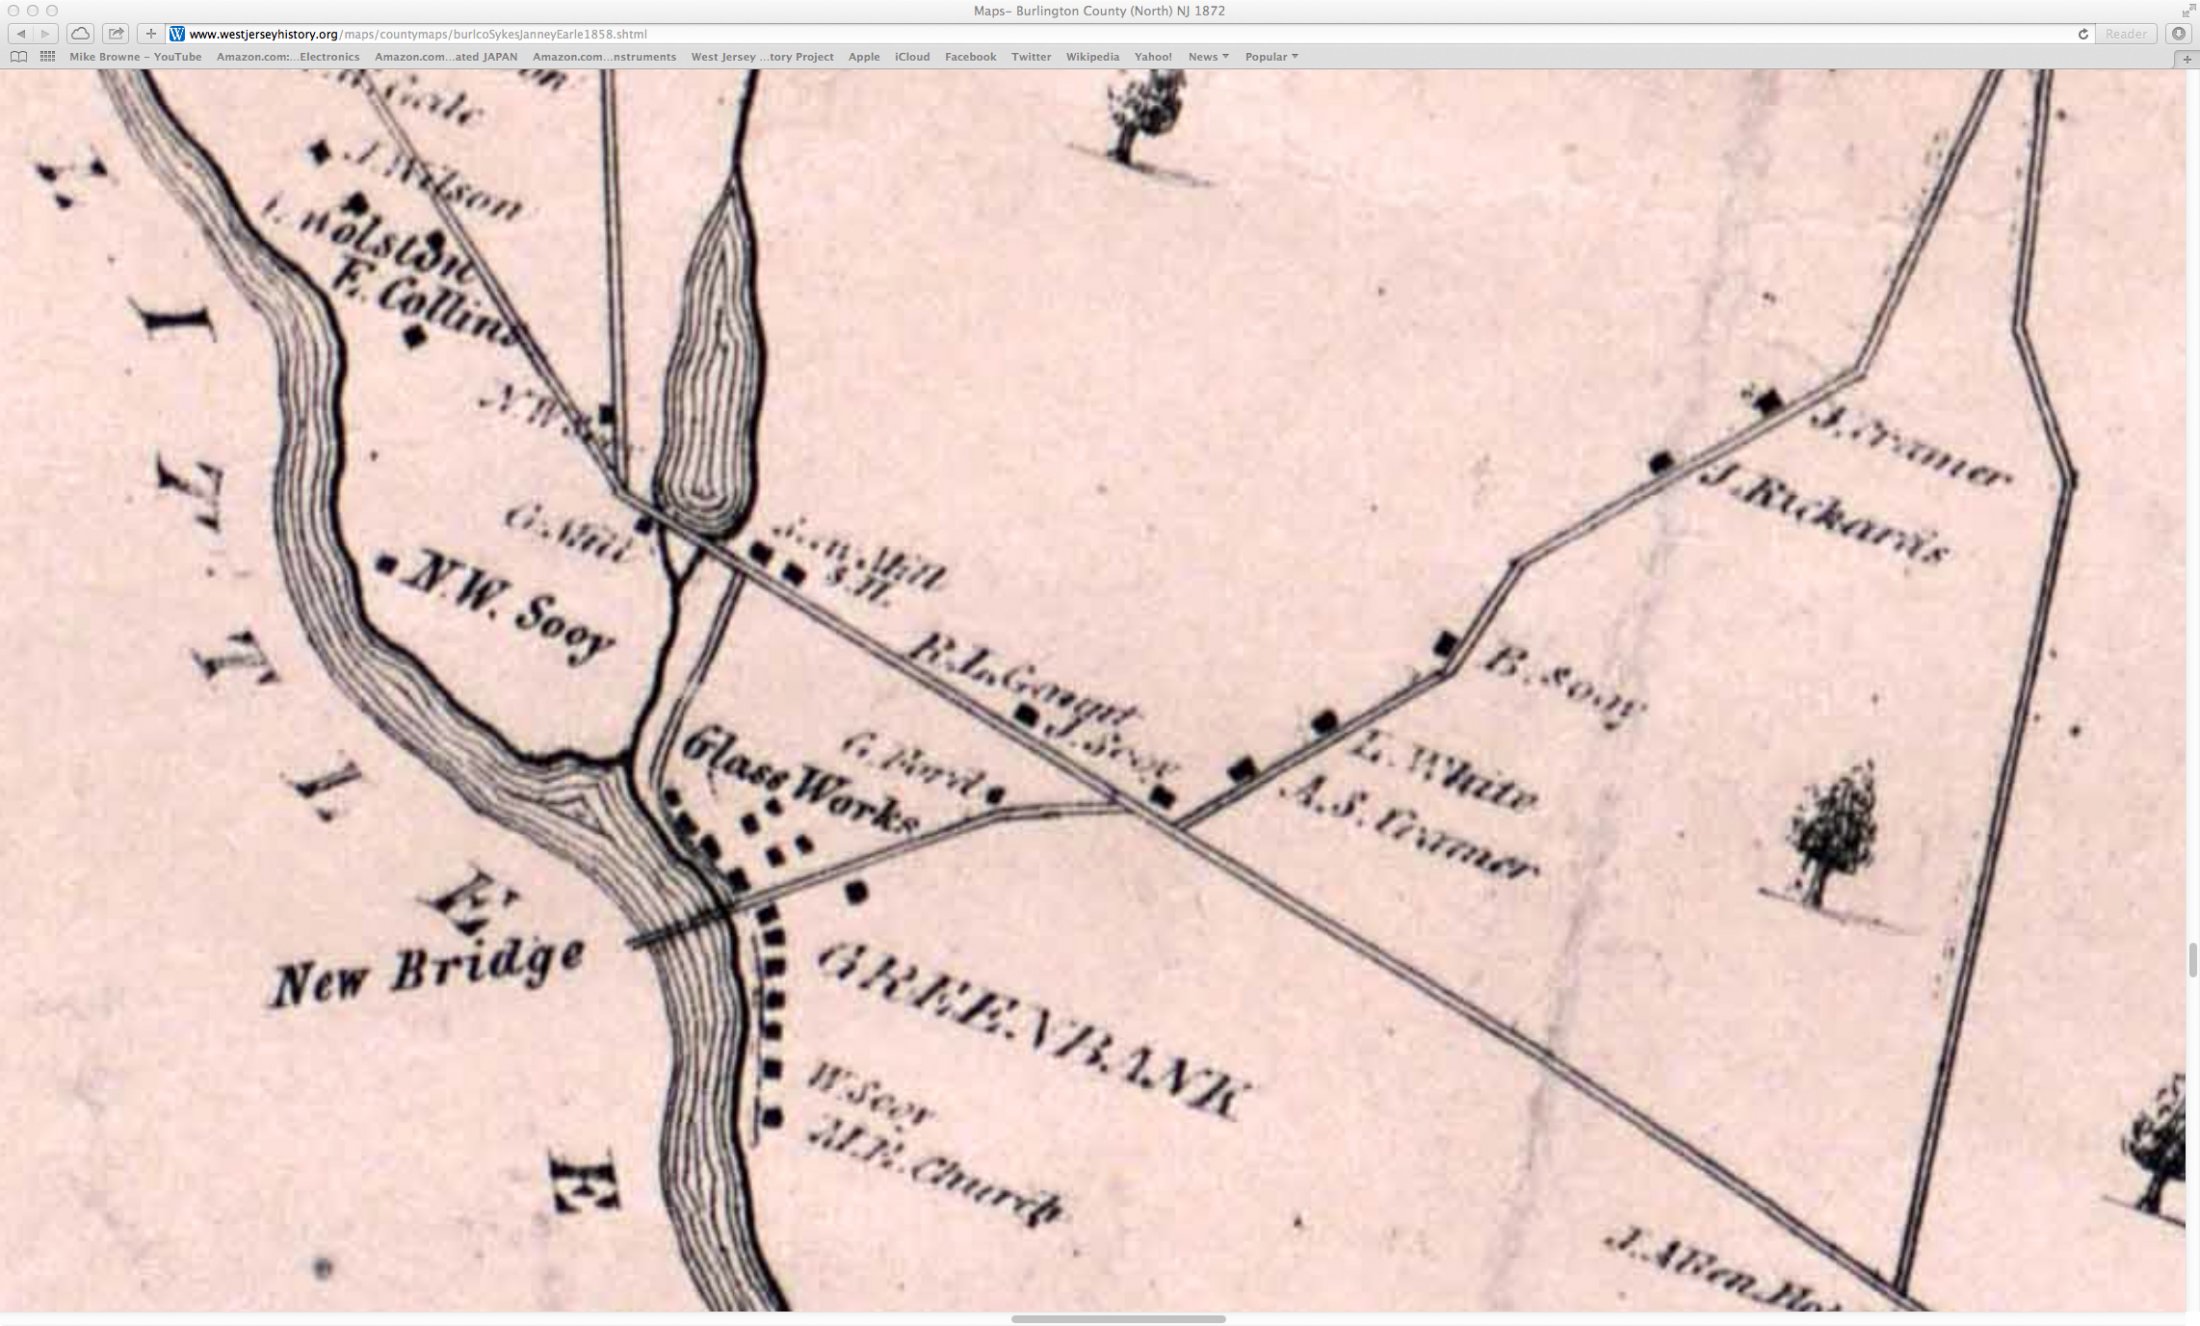 Green Bank - Part of a 1858 Burlington County Map